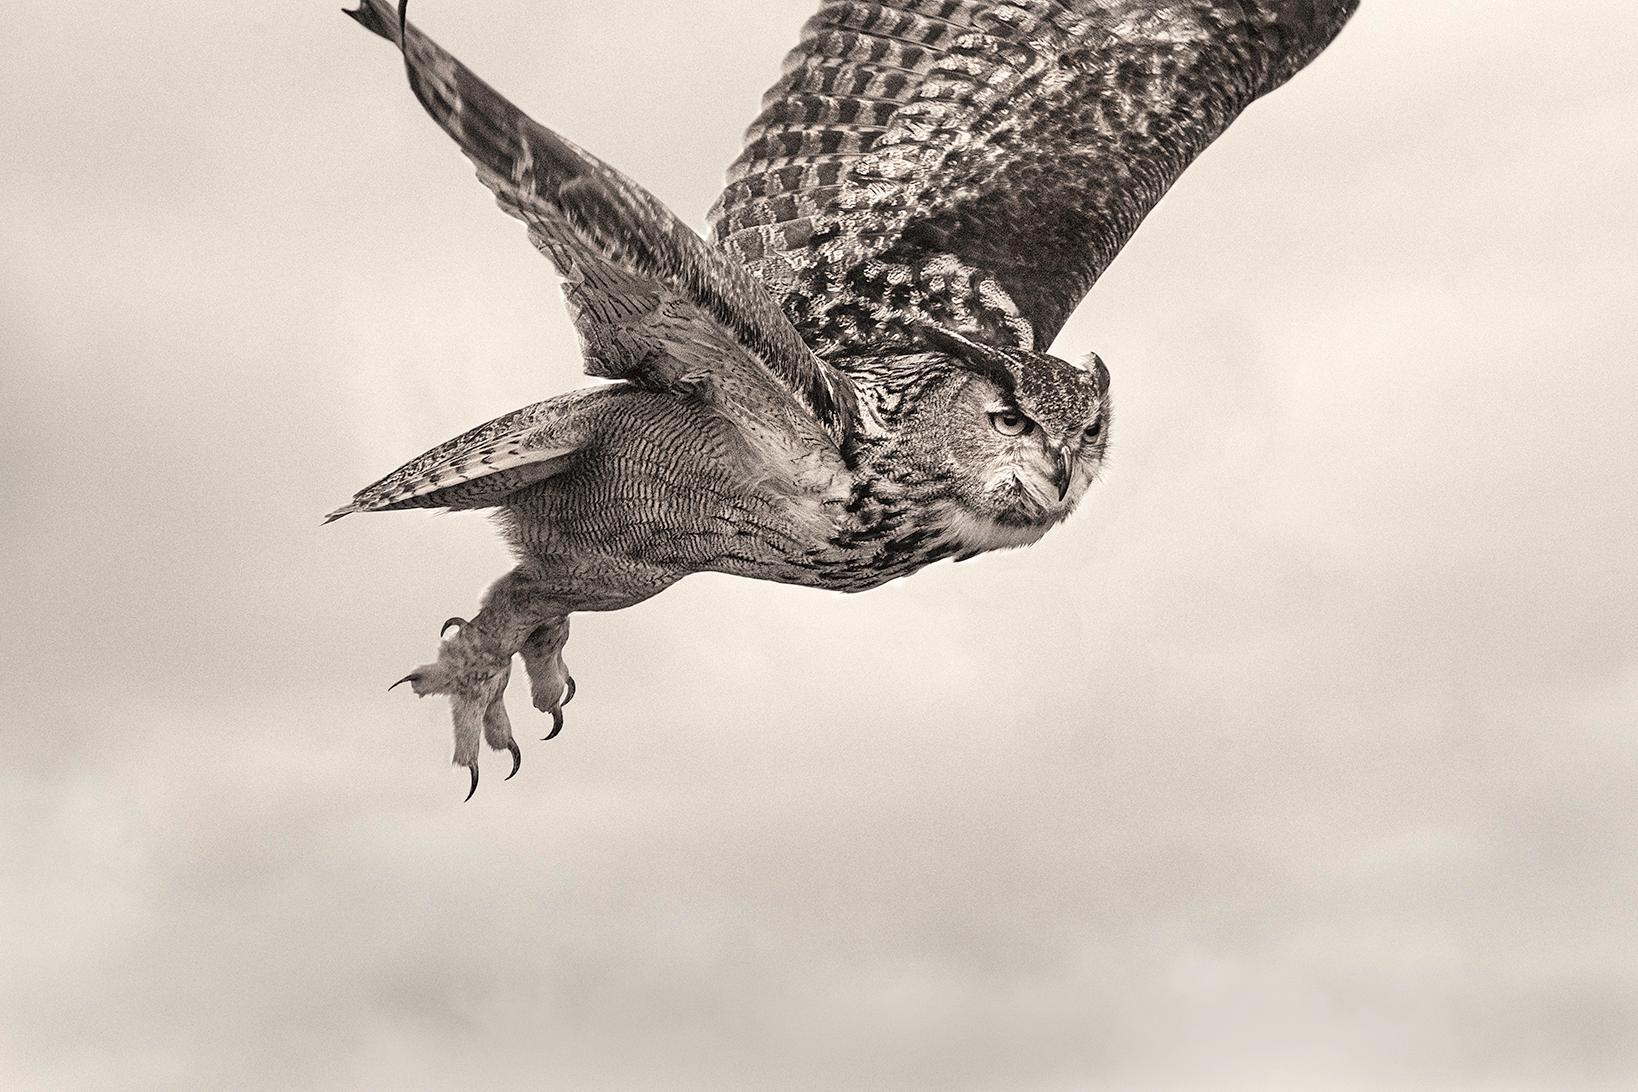 Eagle Owl Flying, limited edition photograph, signed, Platinum/Palladium Print